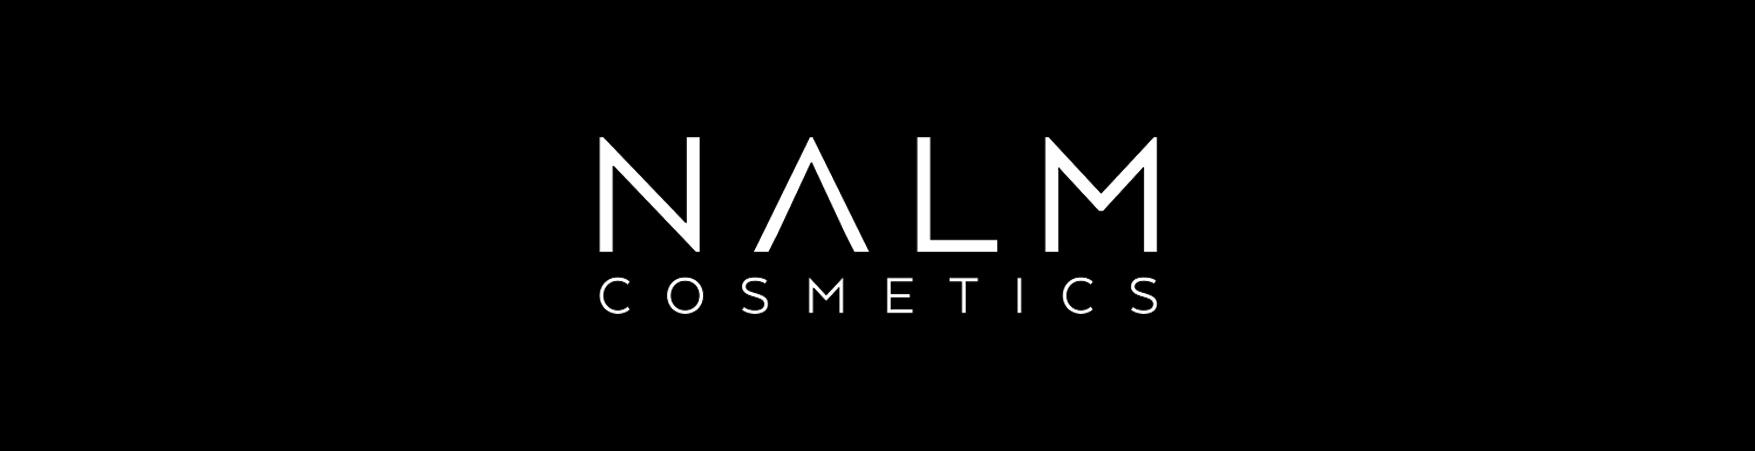 Nalm Cosmetics